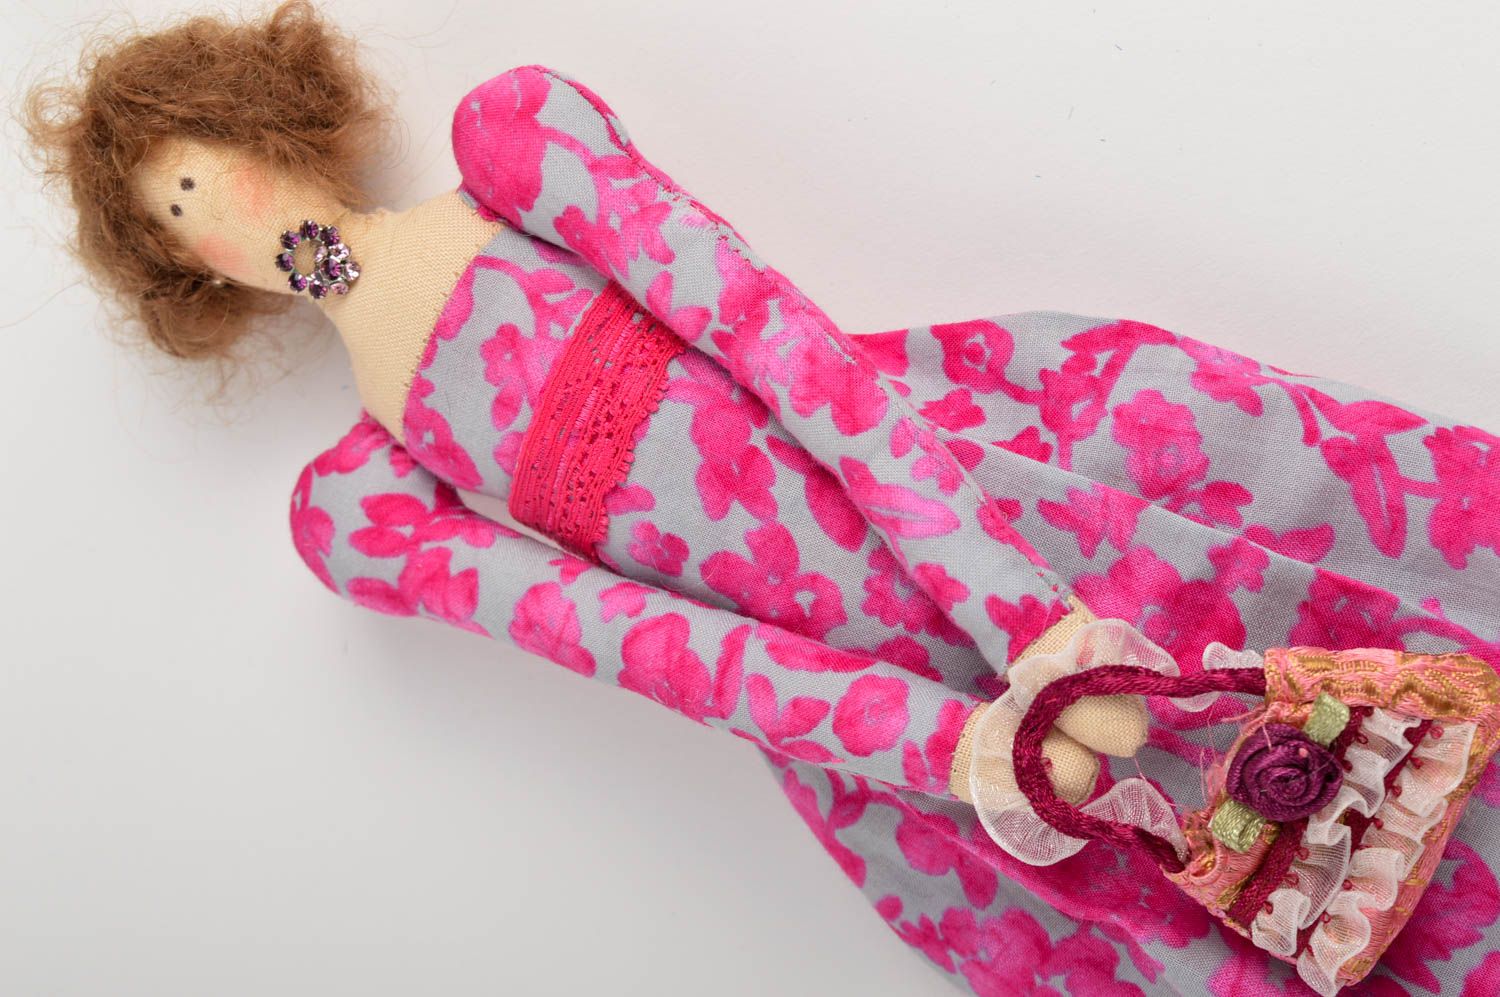 Handmade doll in pink dress stuffed toy designer childrens toy decoration ideas photo 4